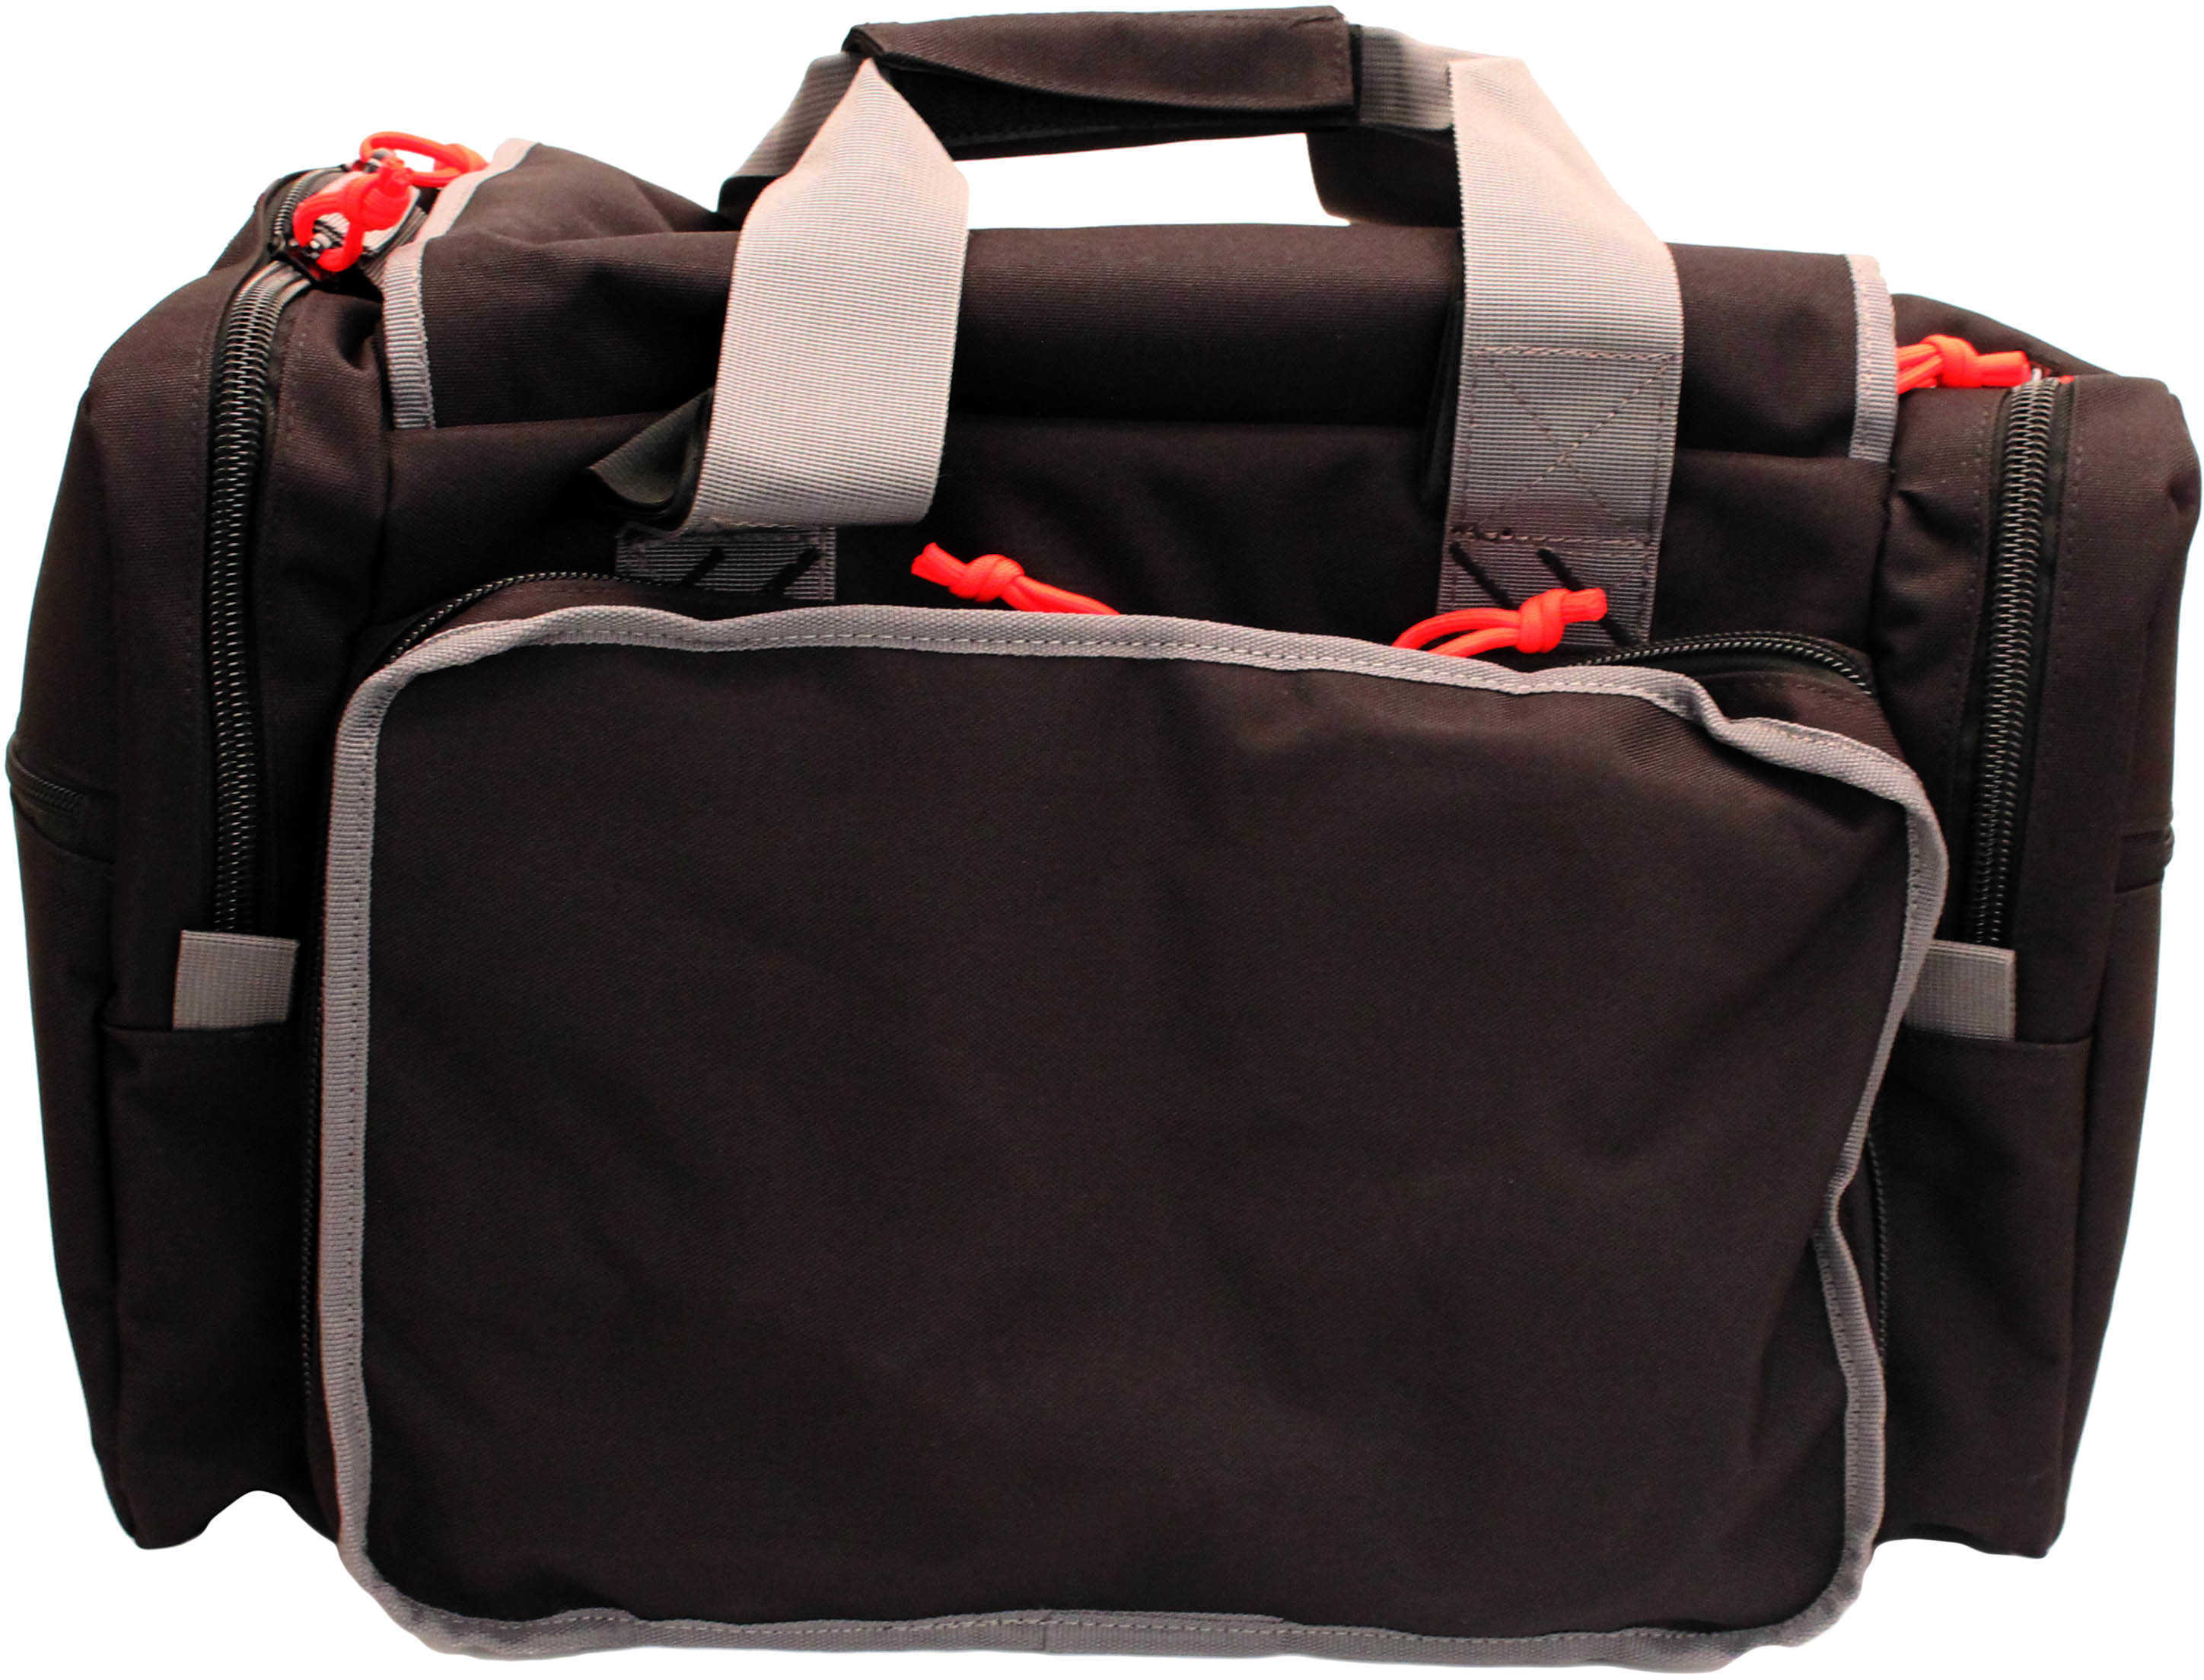 G Outdoors 2014LRB Large Range Bag Gun Case Nylon Black